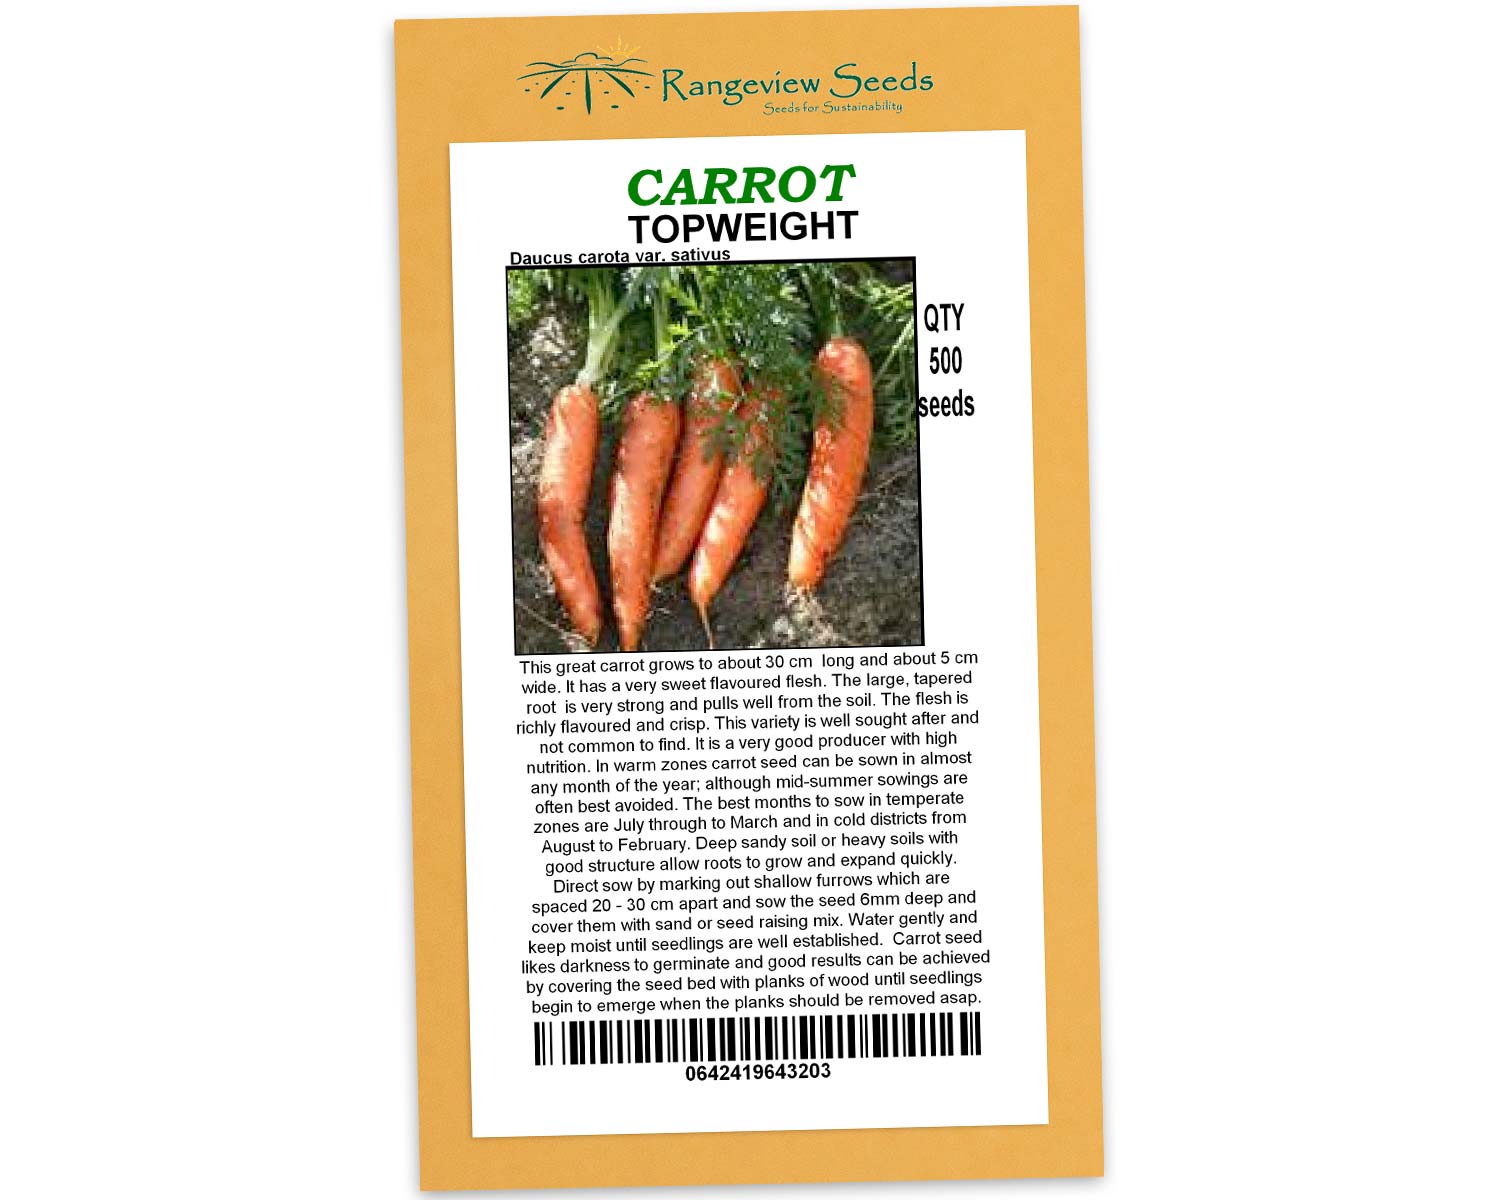 Carrot Topweight - Rangeview Seeds